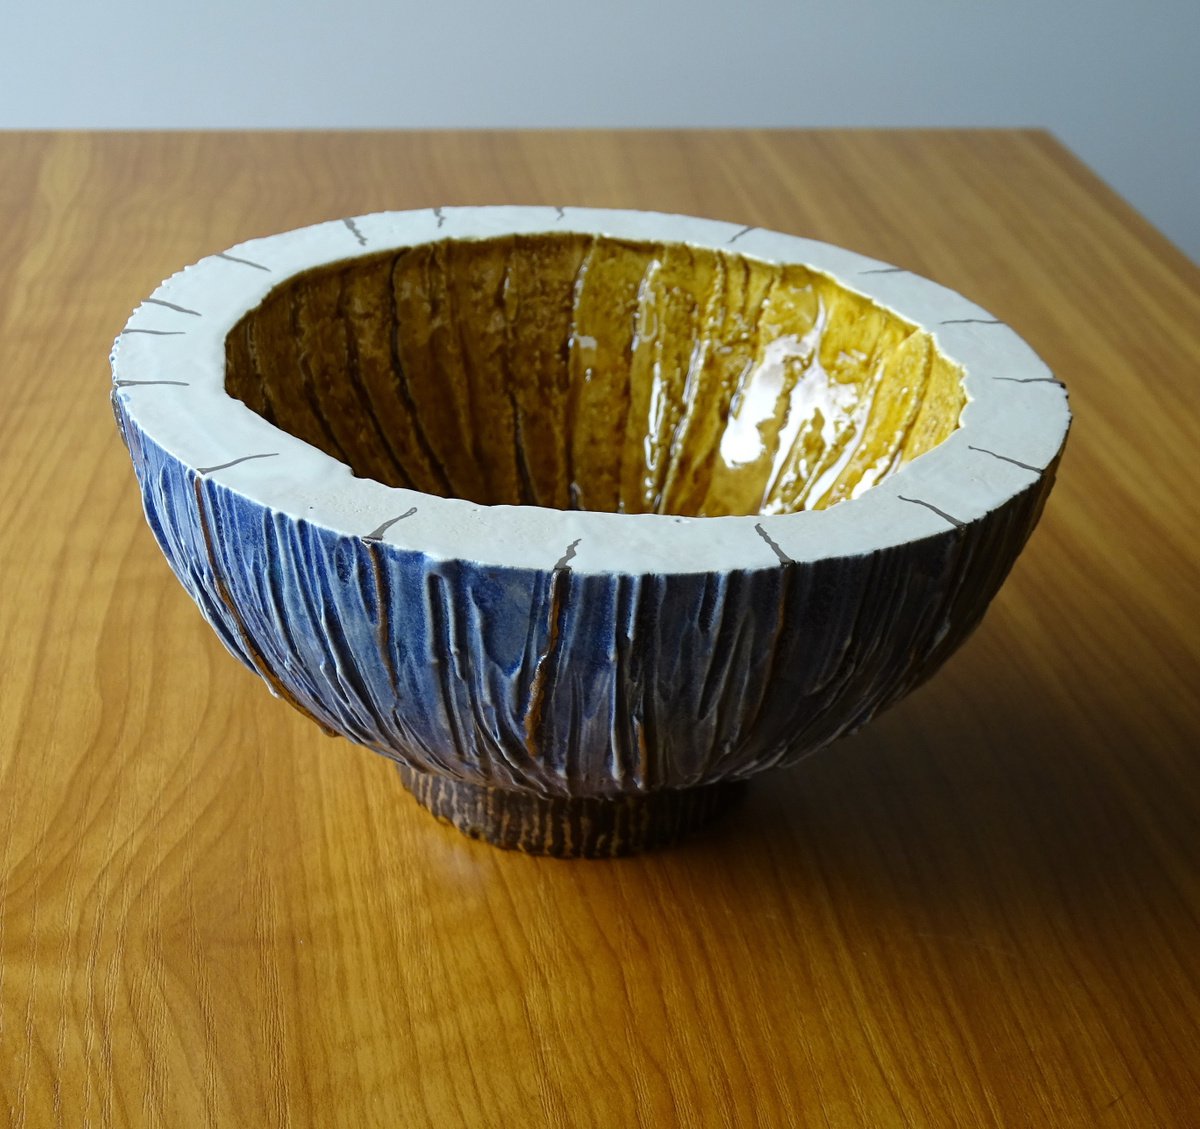 Volcano bowl by Zsolt Pinter